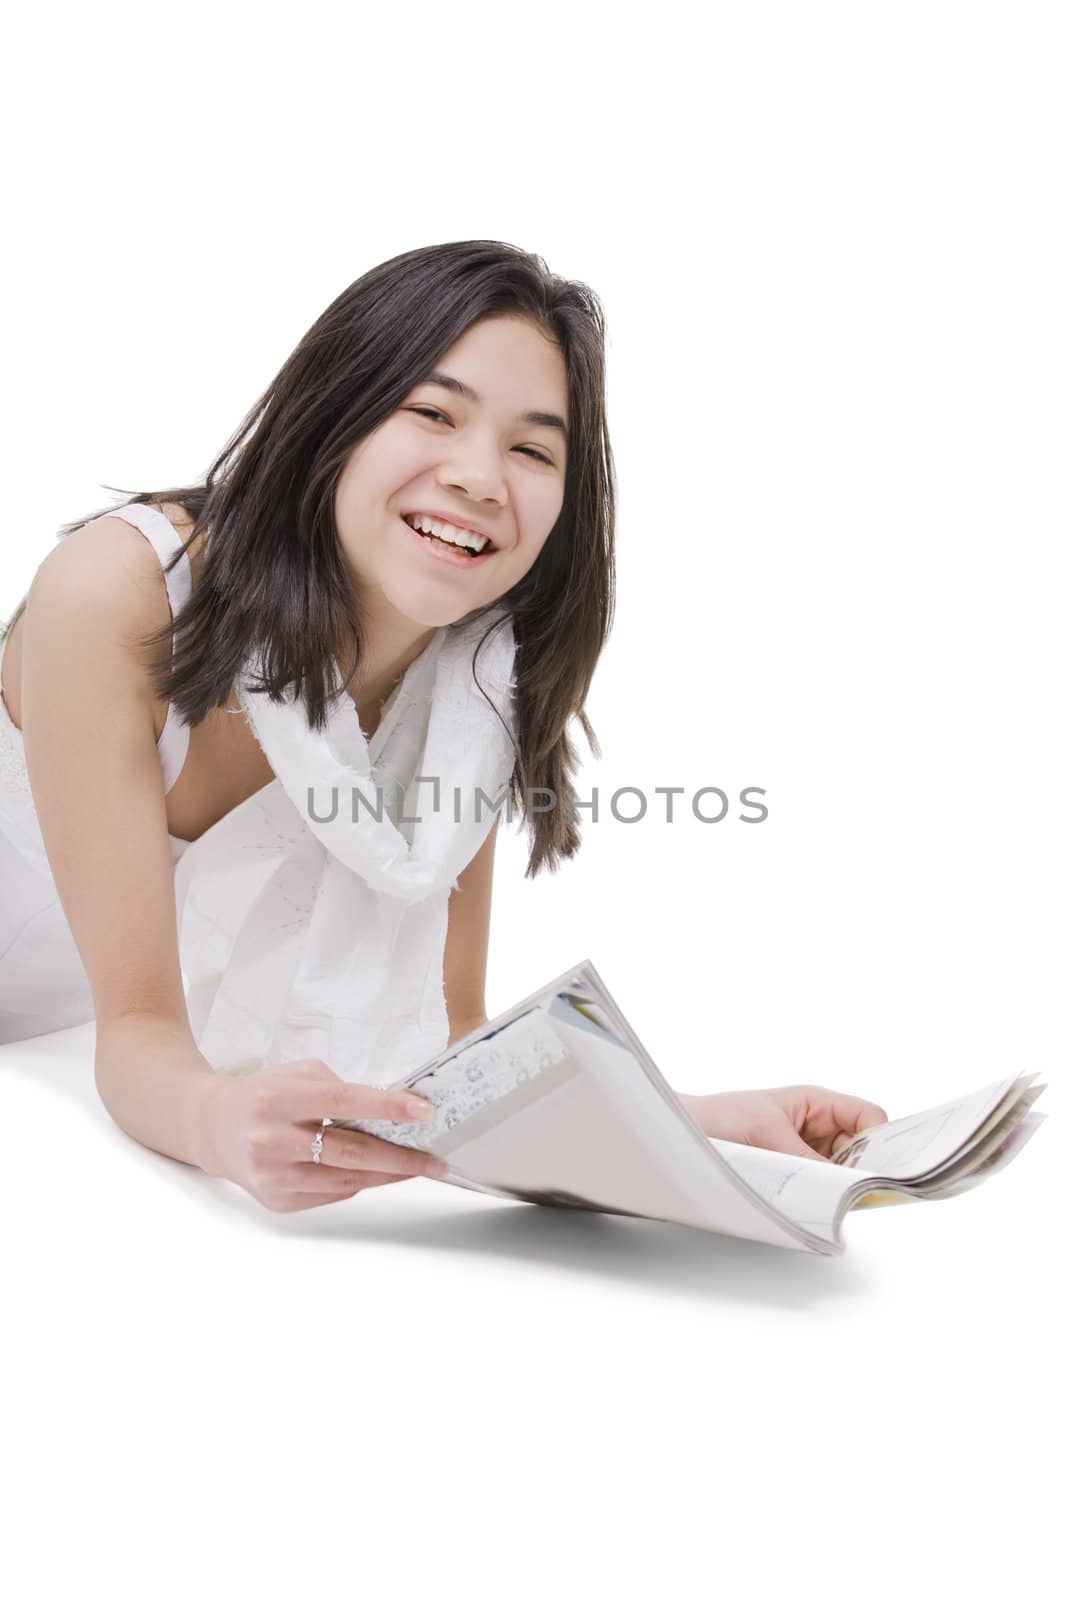 Teen girl in white dress lying down reading a magazine by jarenwicklund